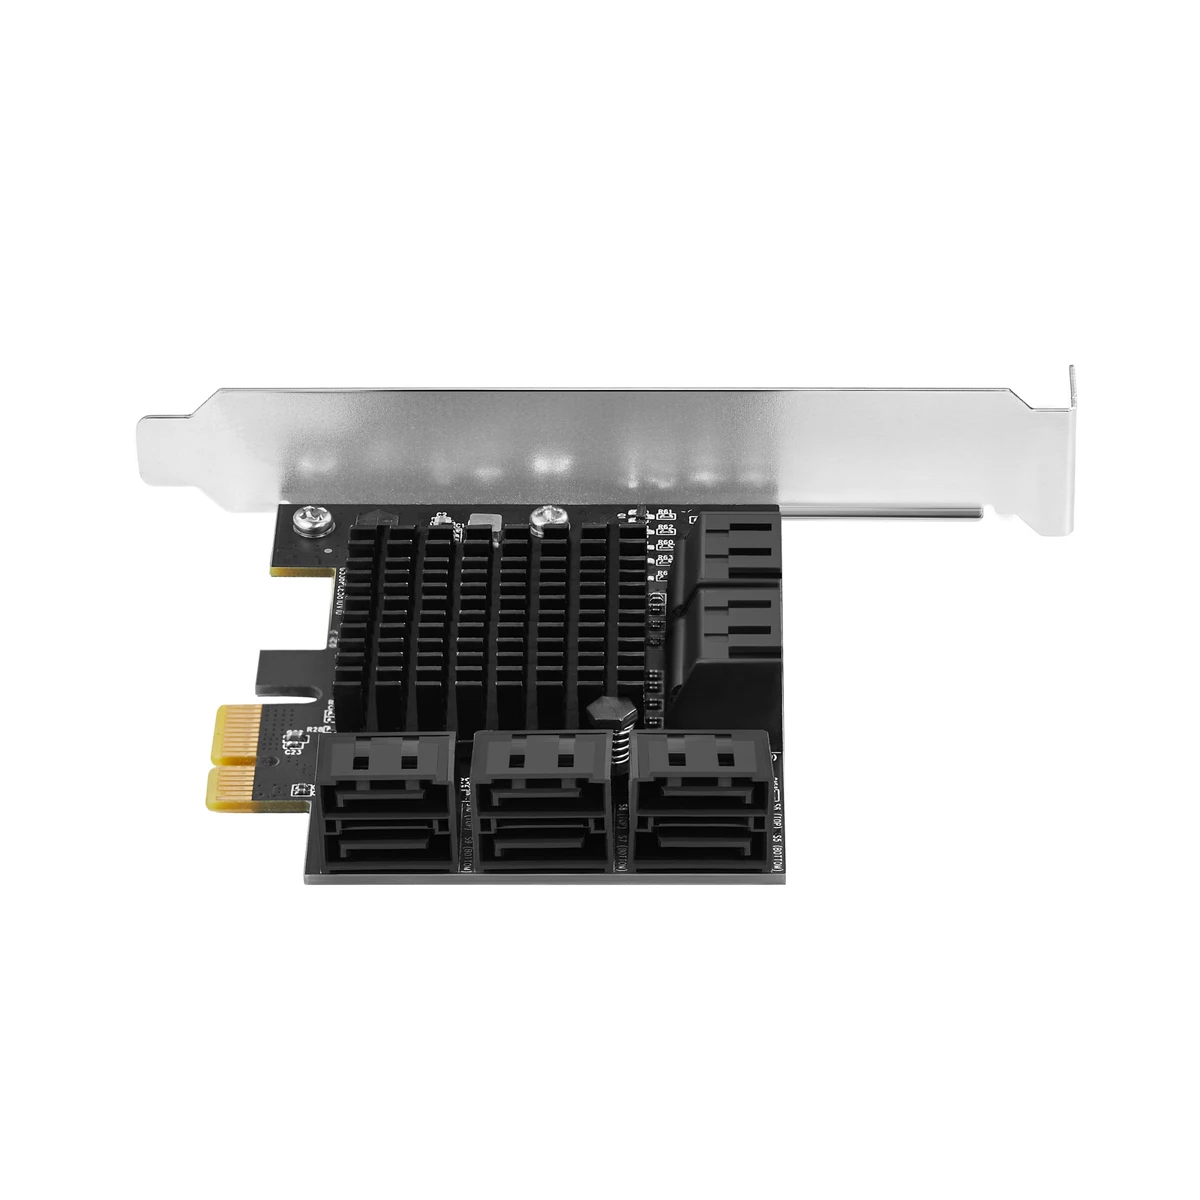 PCIe Gen3 x1 ל-10 יציאות SATA 6G III 3.0 בקר הרחבה כרטיס JMicron Jmb שבב שאינם Raid 6 ערוצים עצמאיים עבור Deaktop - 4